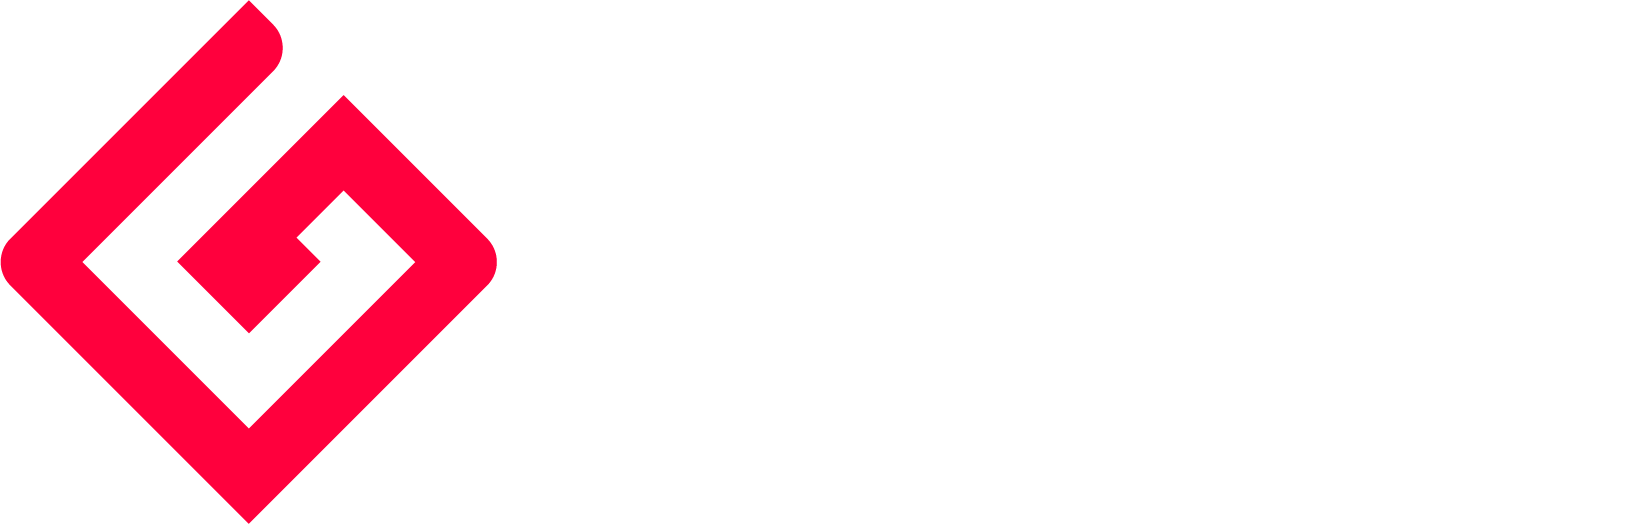 Ggtech Entertainment Tech Education And Esports 